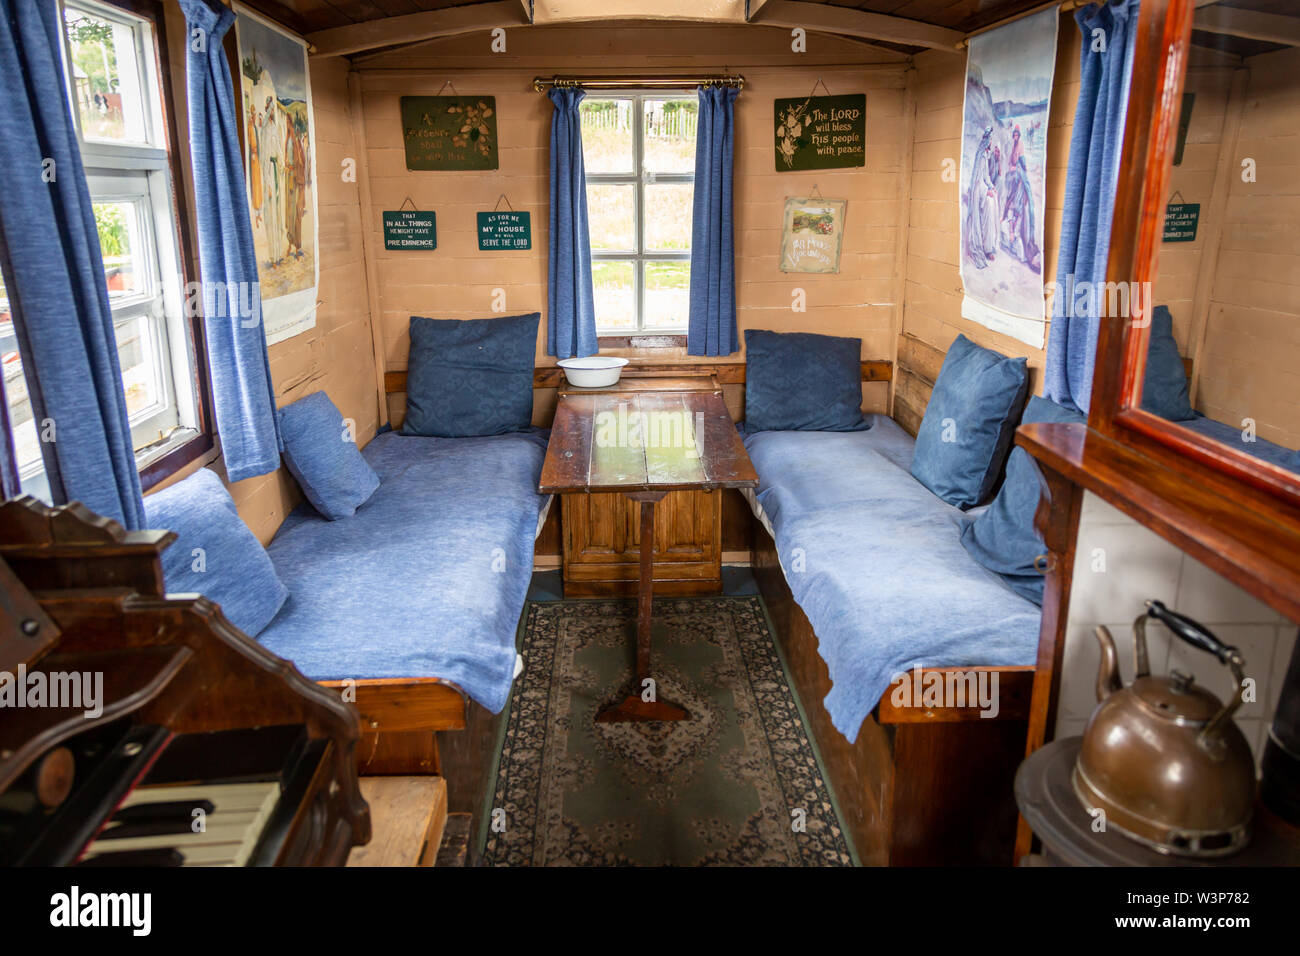 Interior view of a horse drawn wagon type caravan, UK Stock Photo